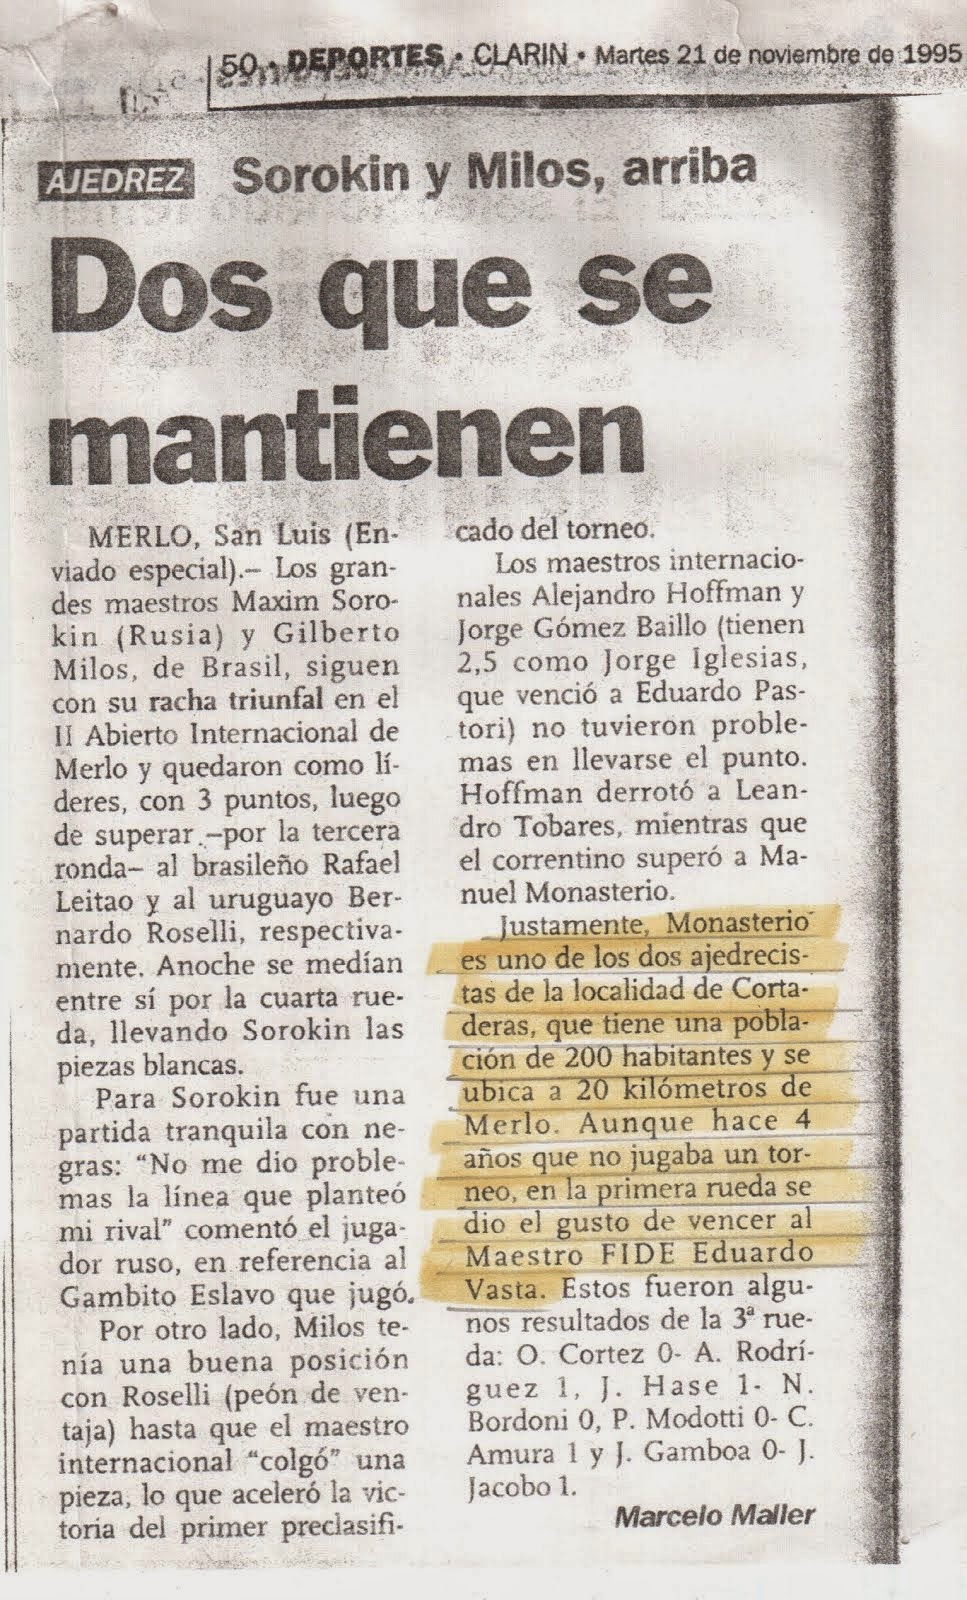 Newspaper recounting my win over my late friend FM Eduardo Vasta ELO 2400